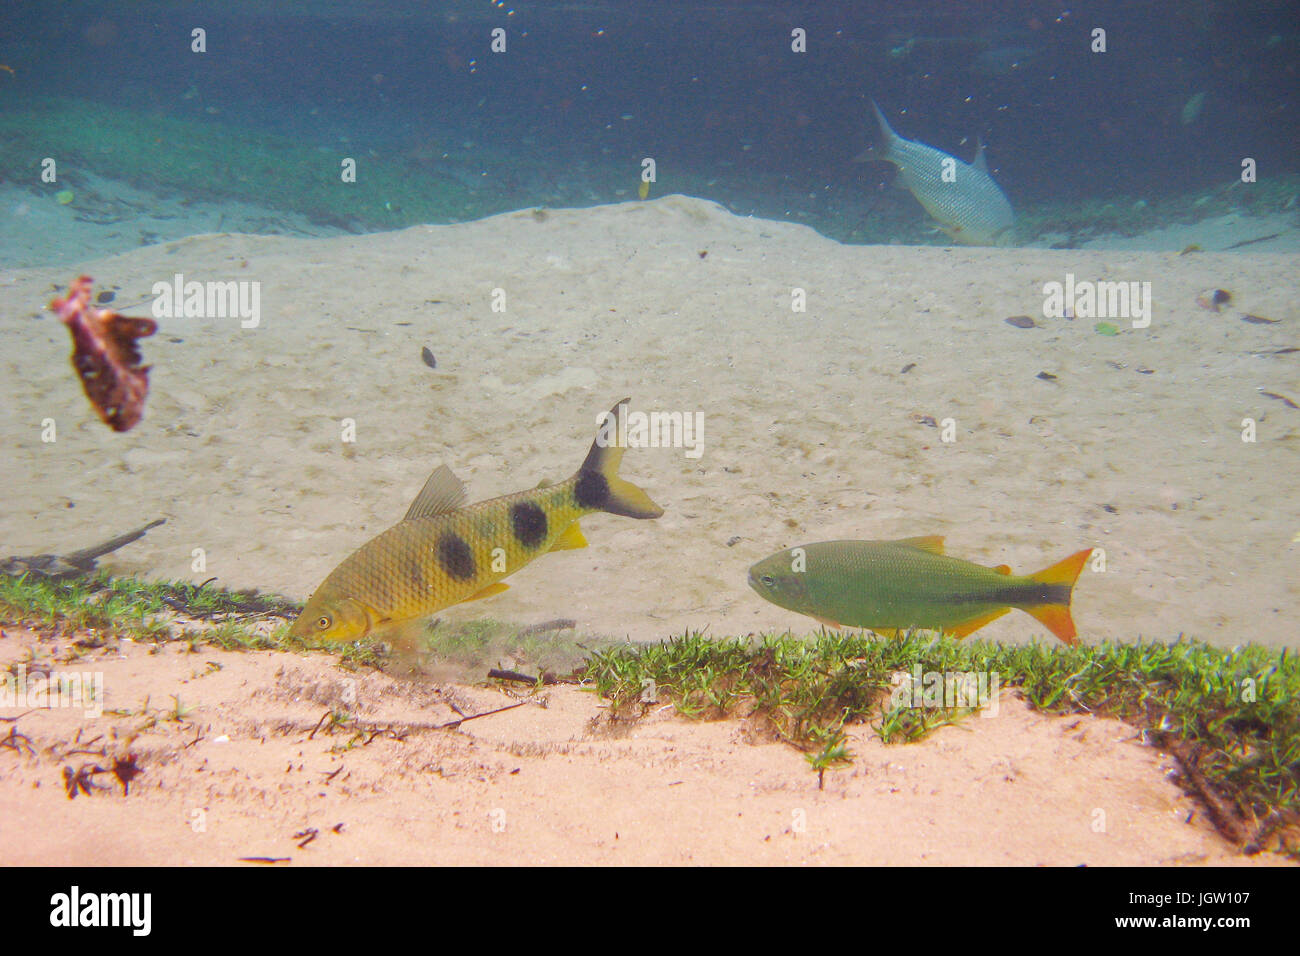 Fish, Piraputanga, Brycon hilarii, Piava, Leporinus elongatus, Bonito, Mato Grosso do Sul, Brazil Stock Photo